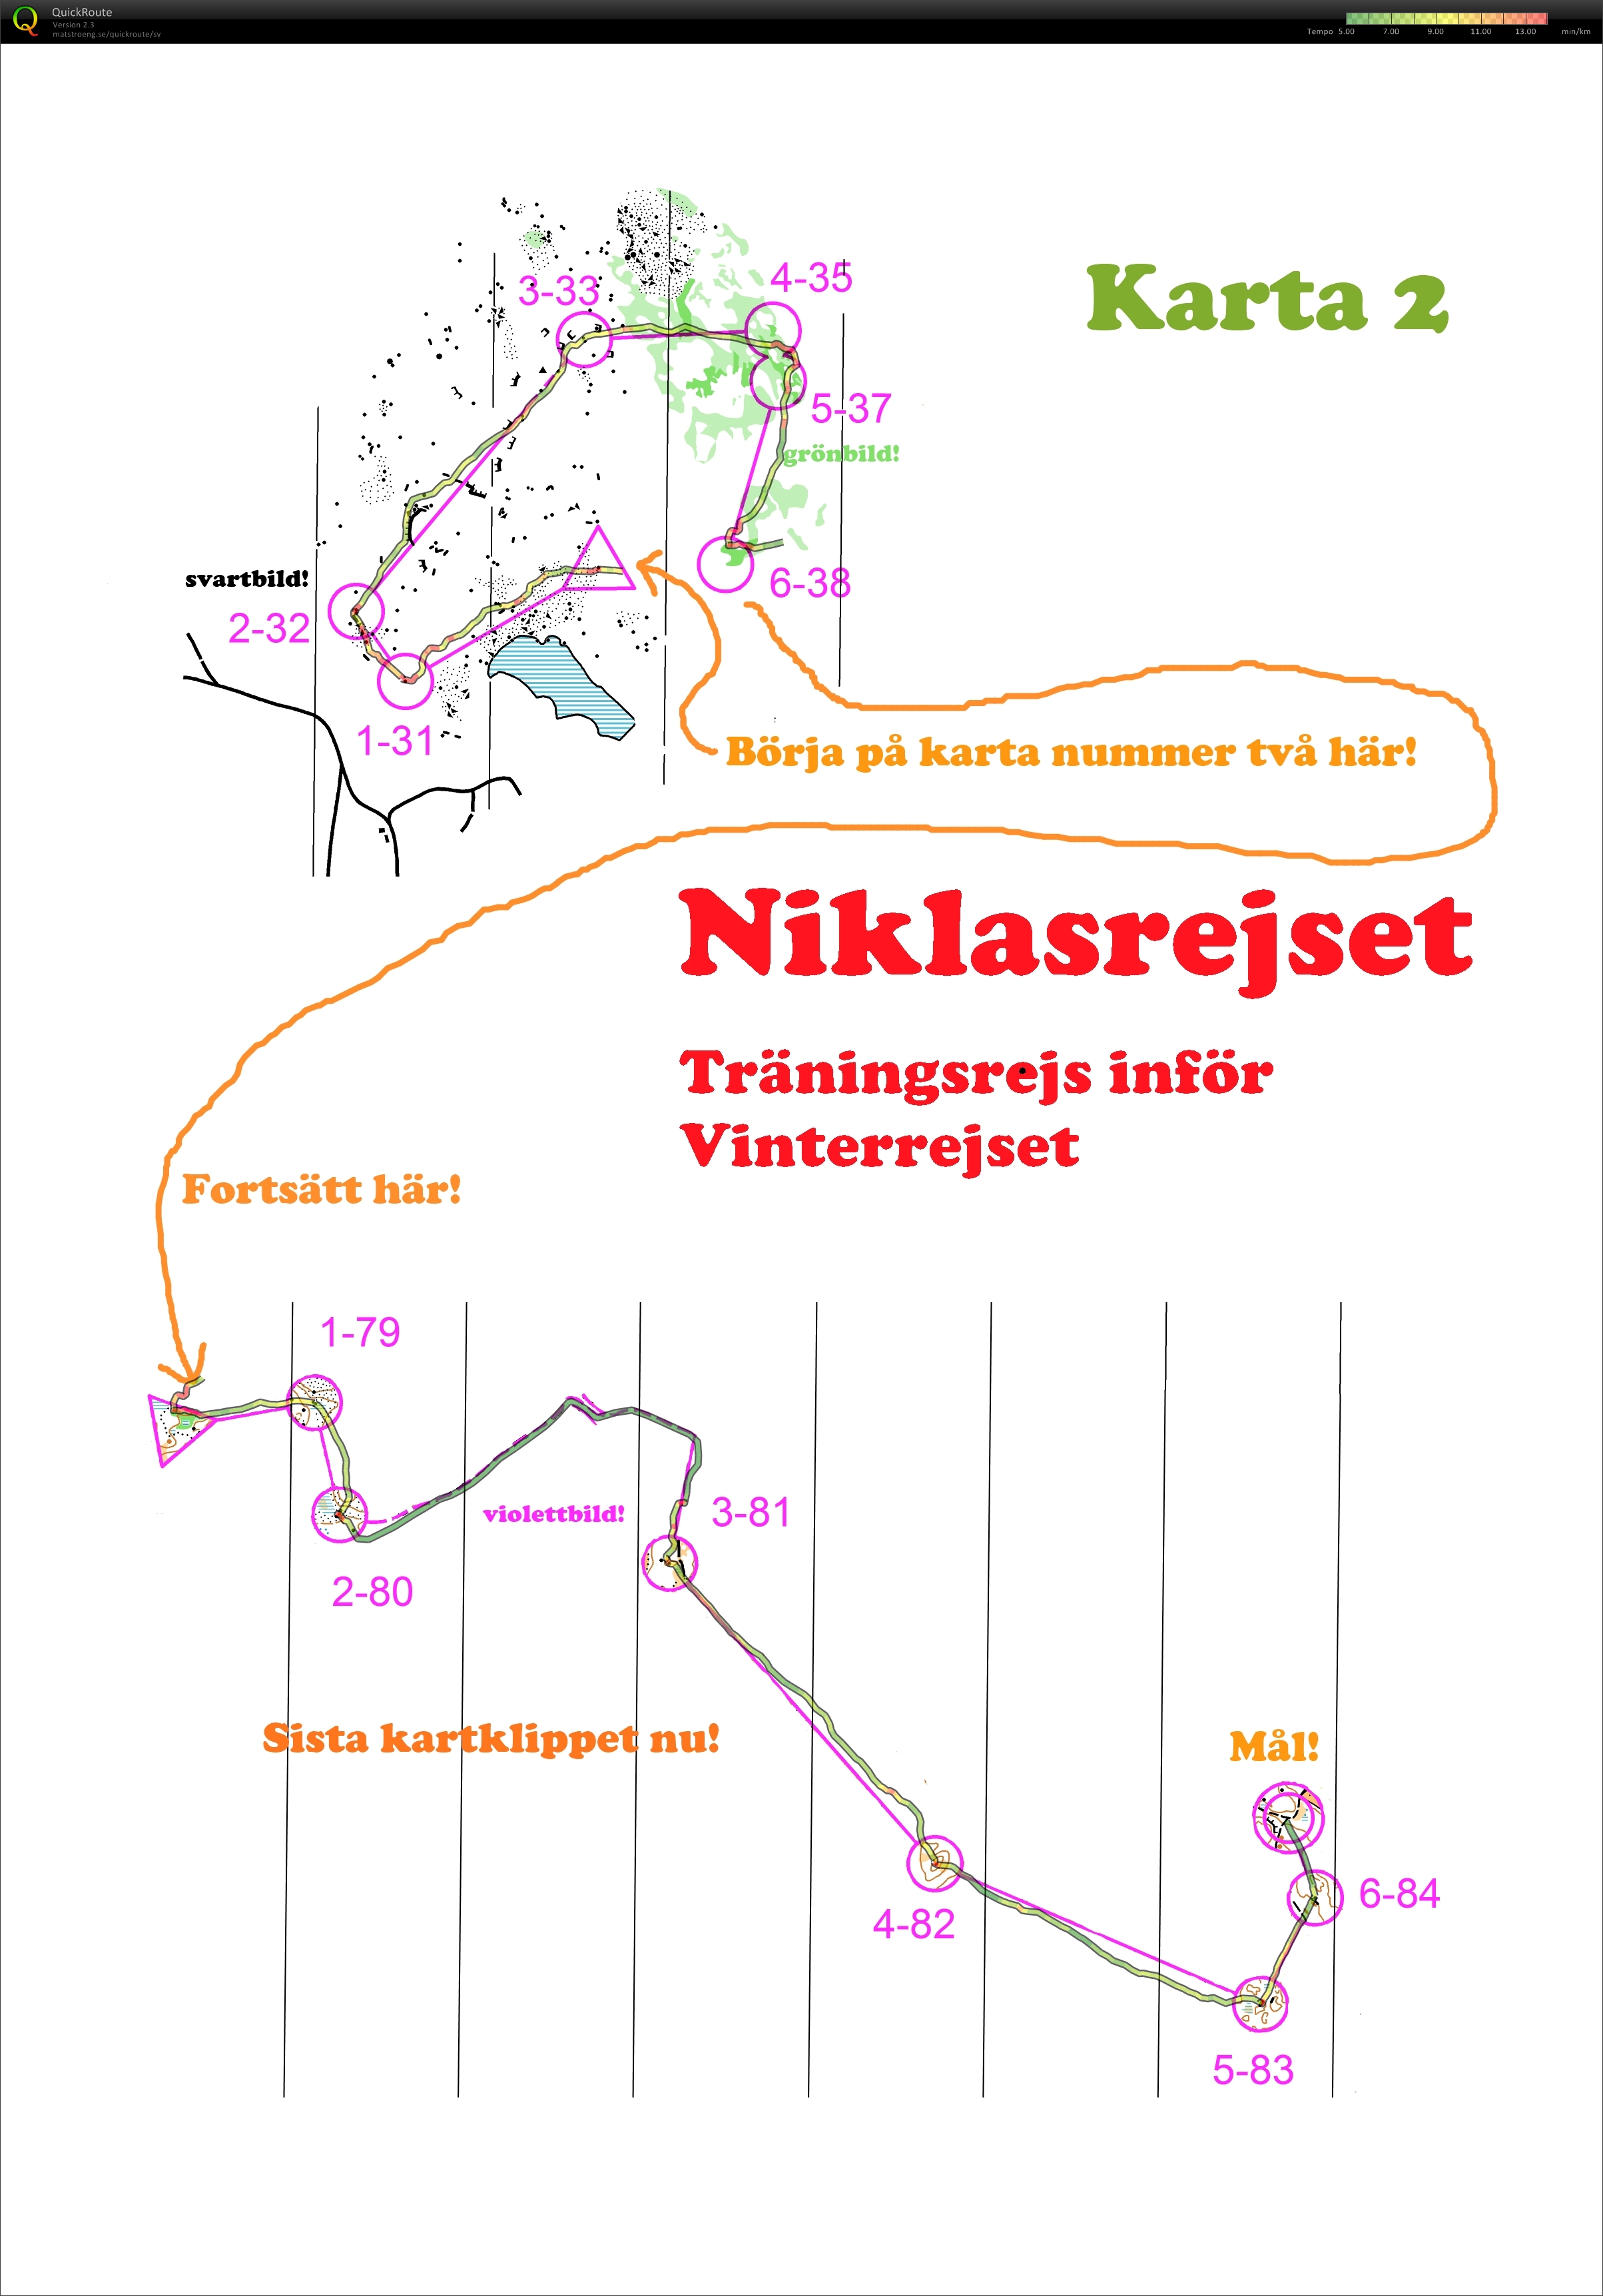 Niklasrejset - karta 2 (06/08/2011)